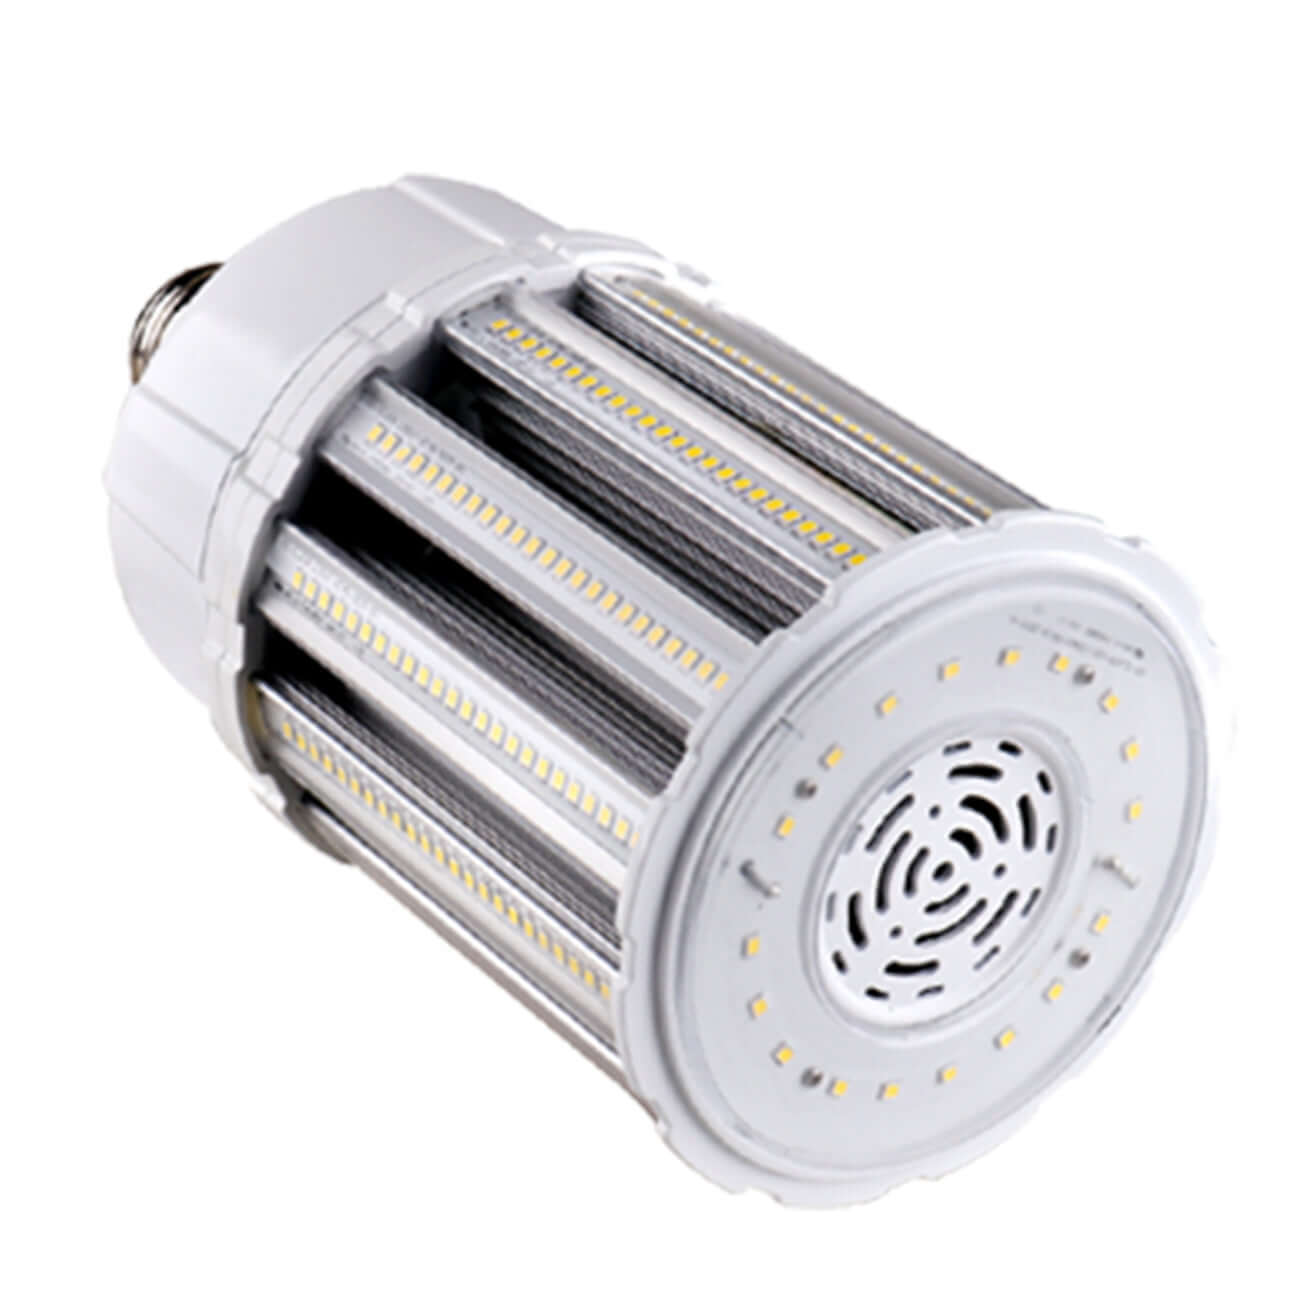 Viribright - 100-Watt LED 12,500 Lumens Corn Bulb - EX39/E26 Adapter Included - 519676